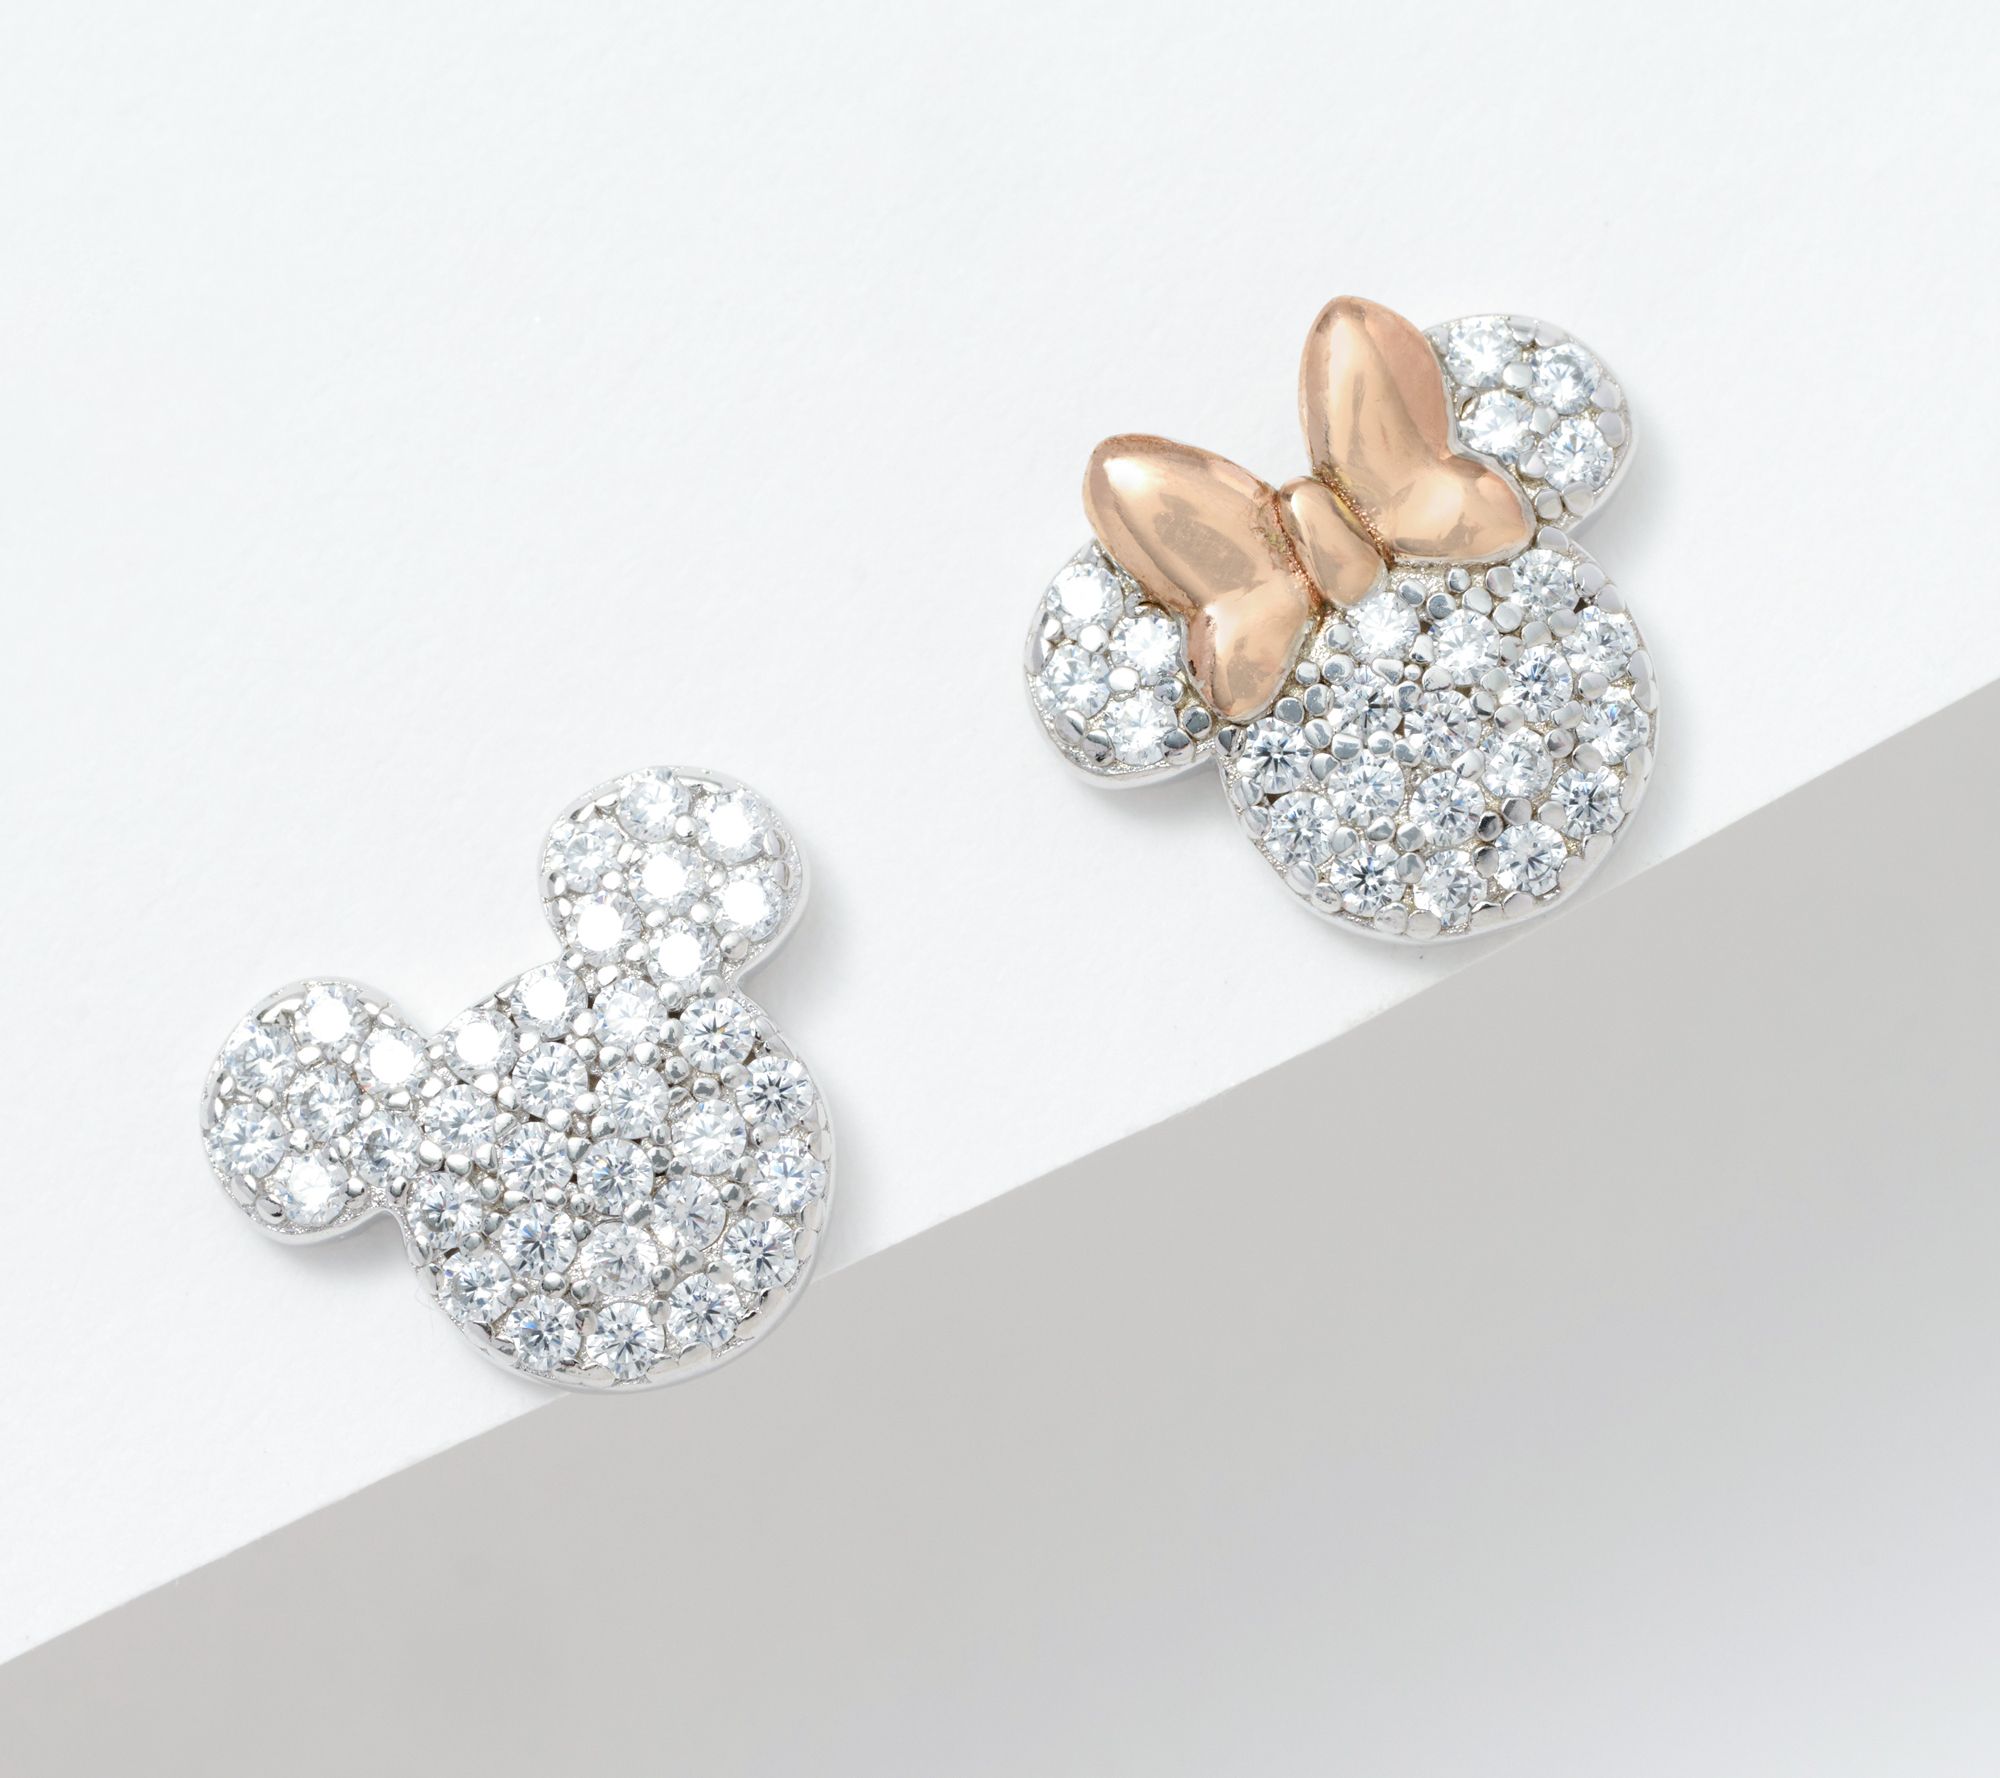 Sterling Silver Jewelry Set: Three Single Mismatched Flat-Back Stud Earrings